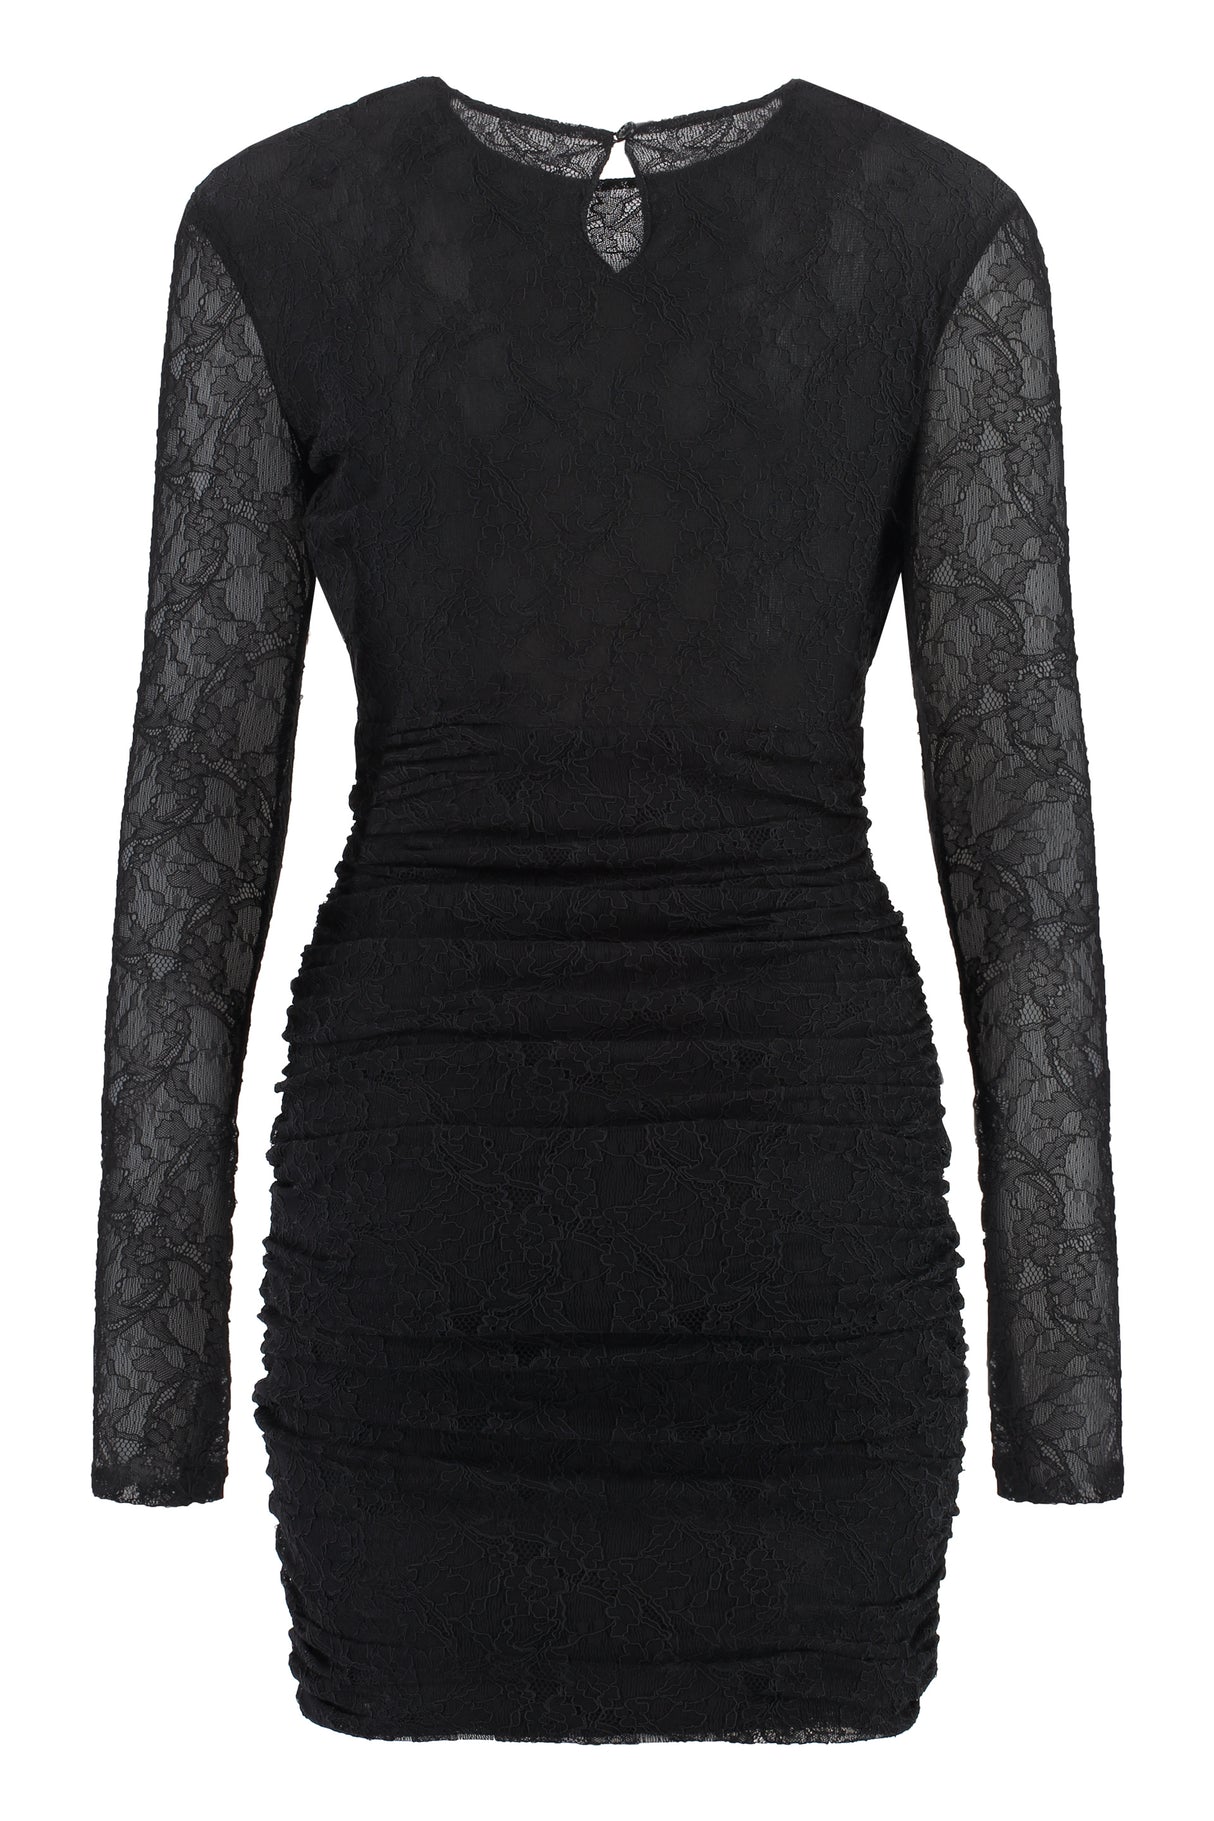 PHILOSOPHY DI LORENZO SERAFINI Stylish Black Lace Mini Dress for Women - Front Cut-Out Detail, Keyhole Button Fastening